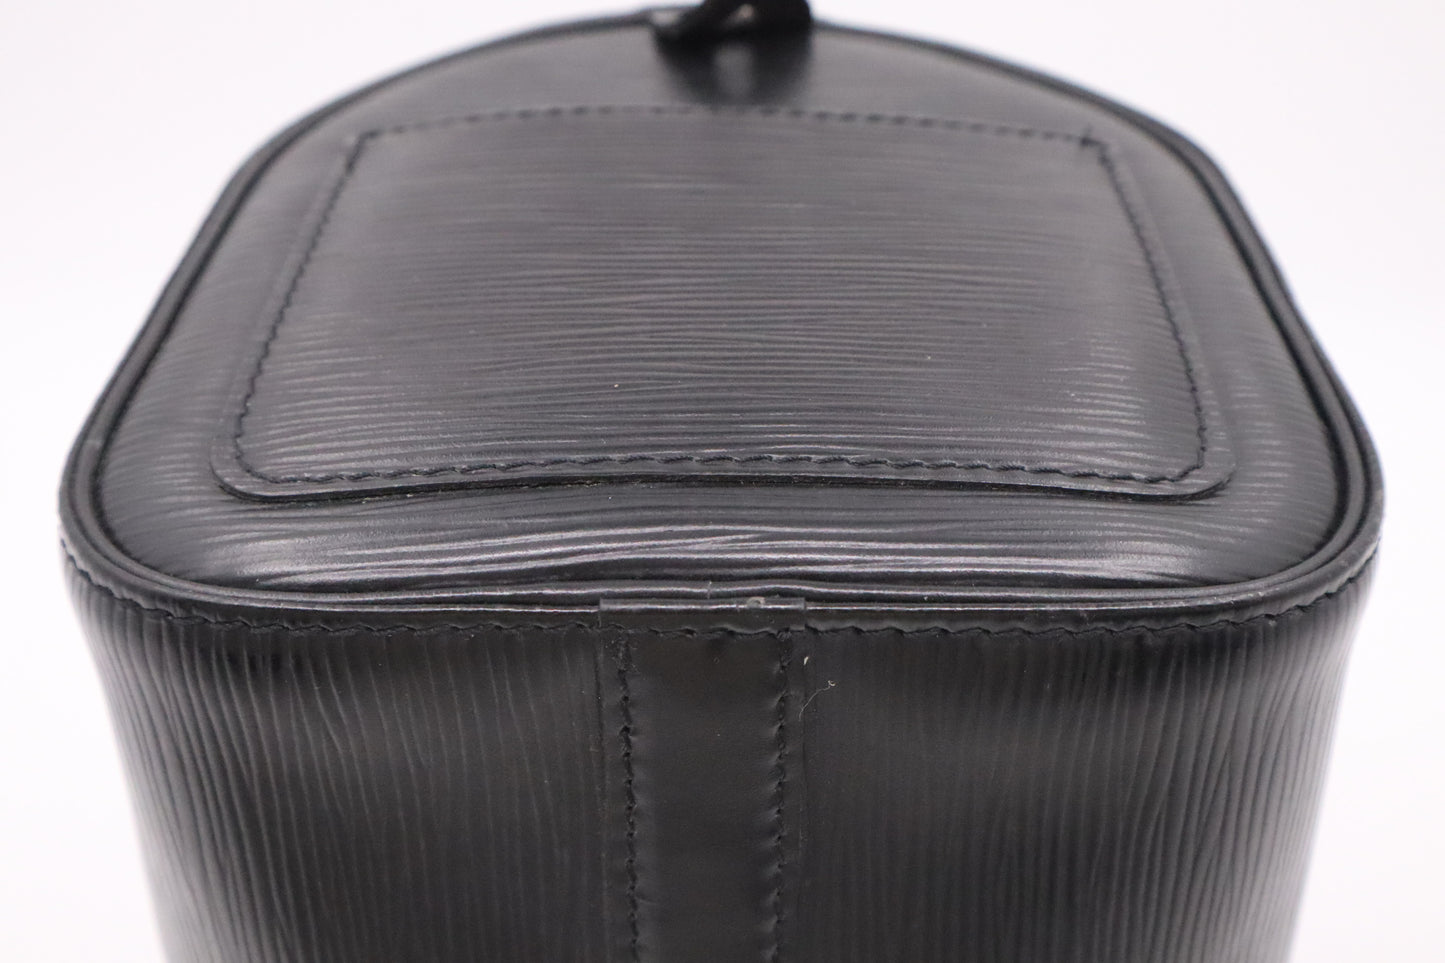 Louis Vuitton Speedy 25 in Black Epi Leather